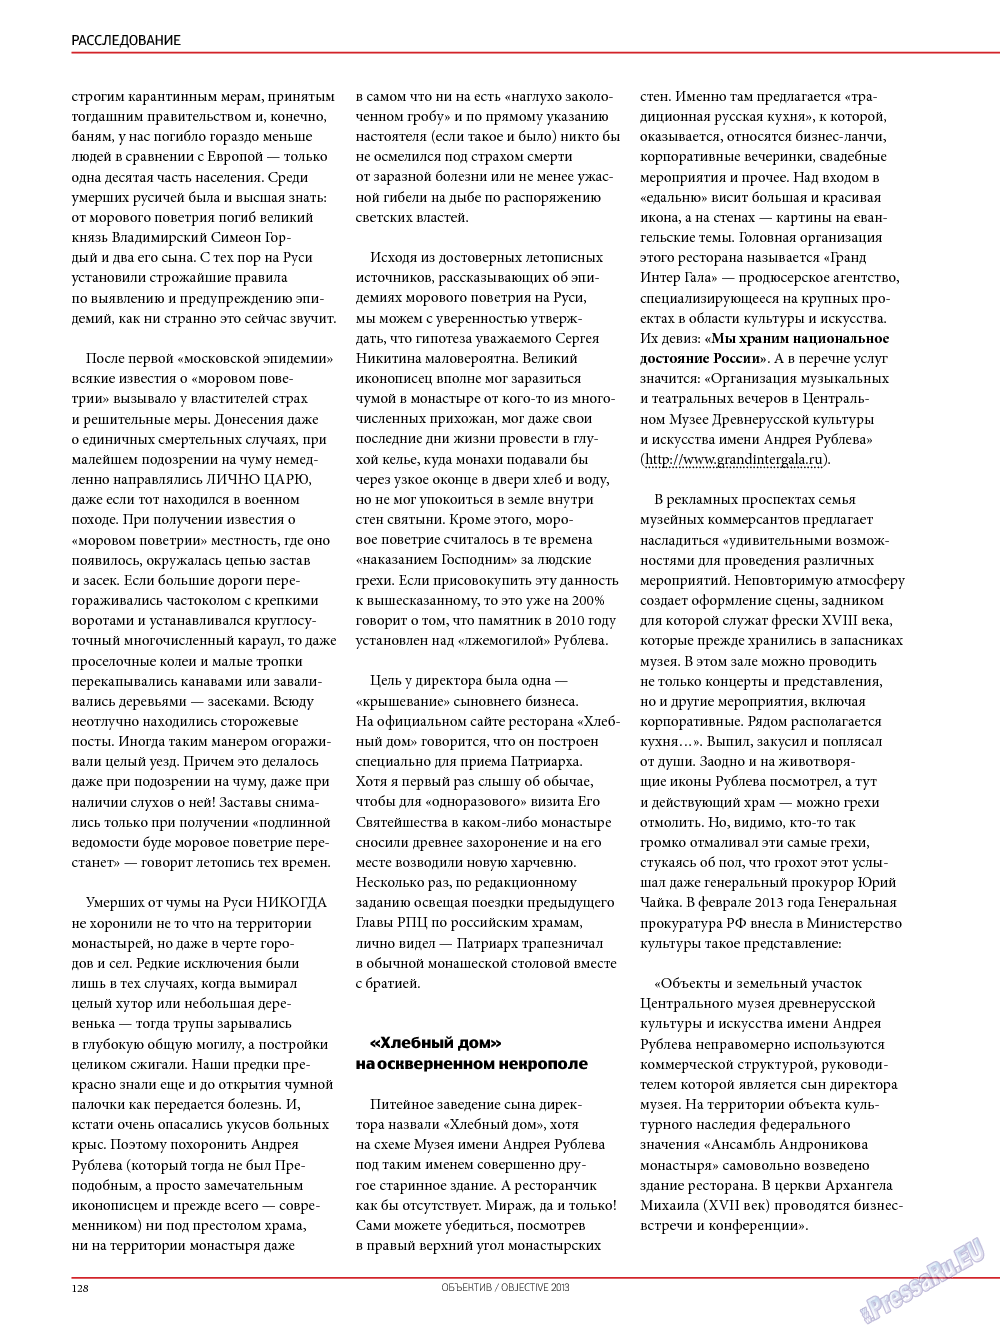 Объектив EU, журнал. 2013 №3 стр.130